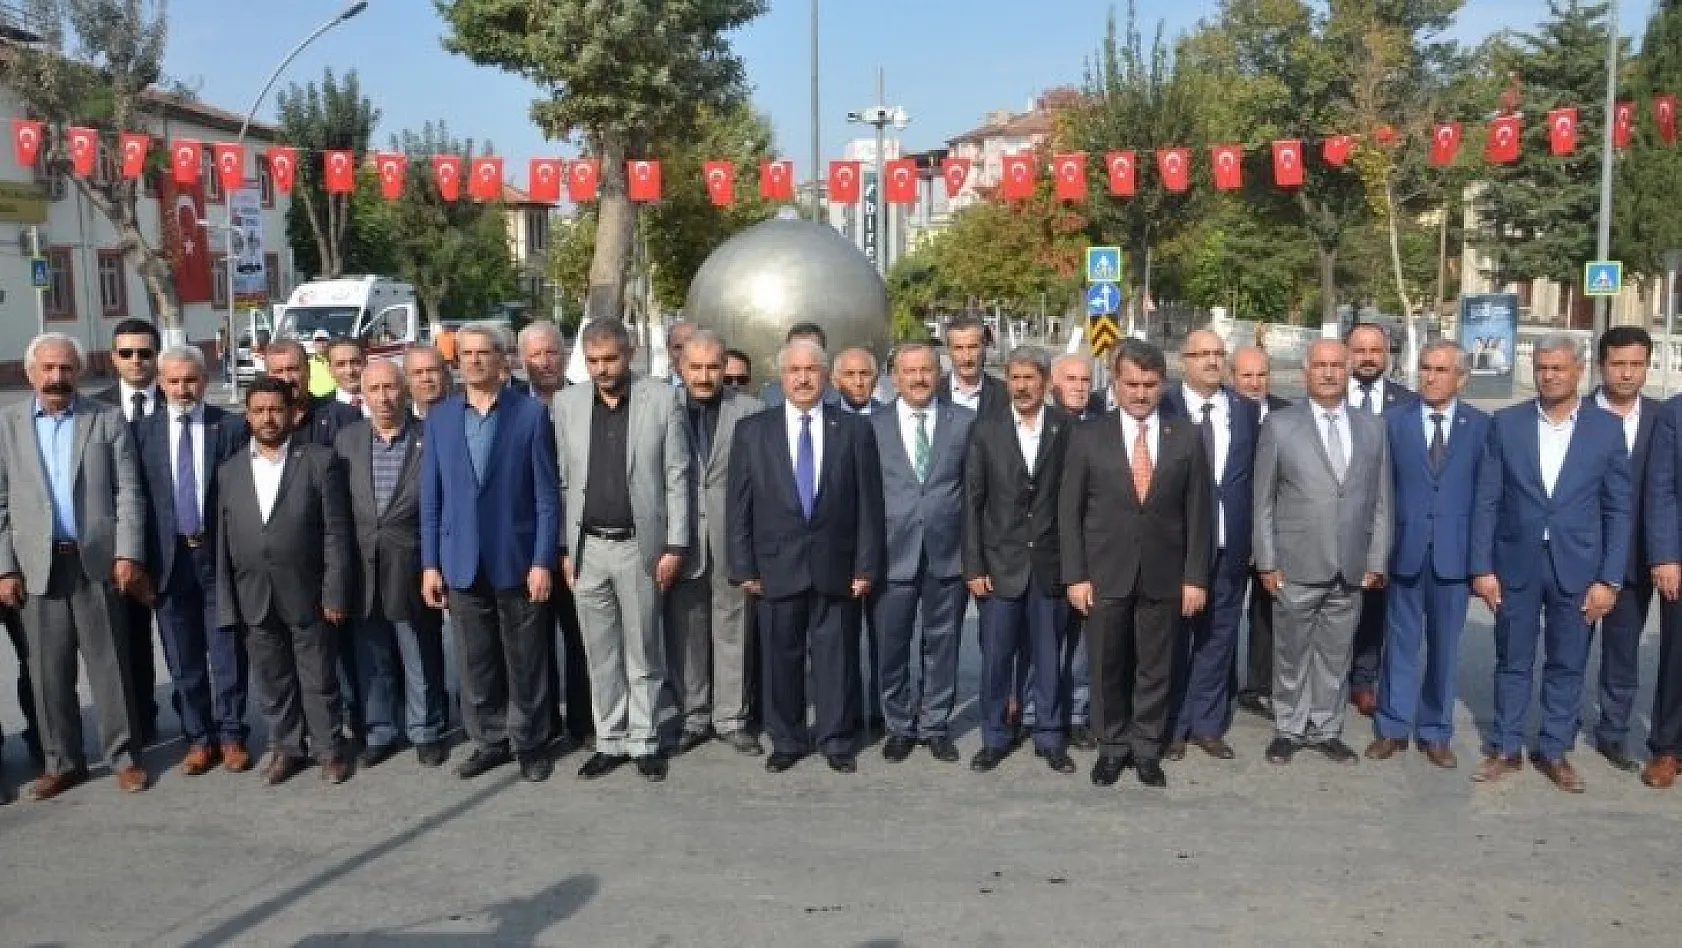 Malatya'da 19 Ekim Muhtarlar Günü kutlandı